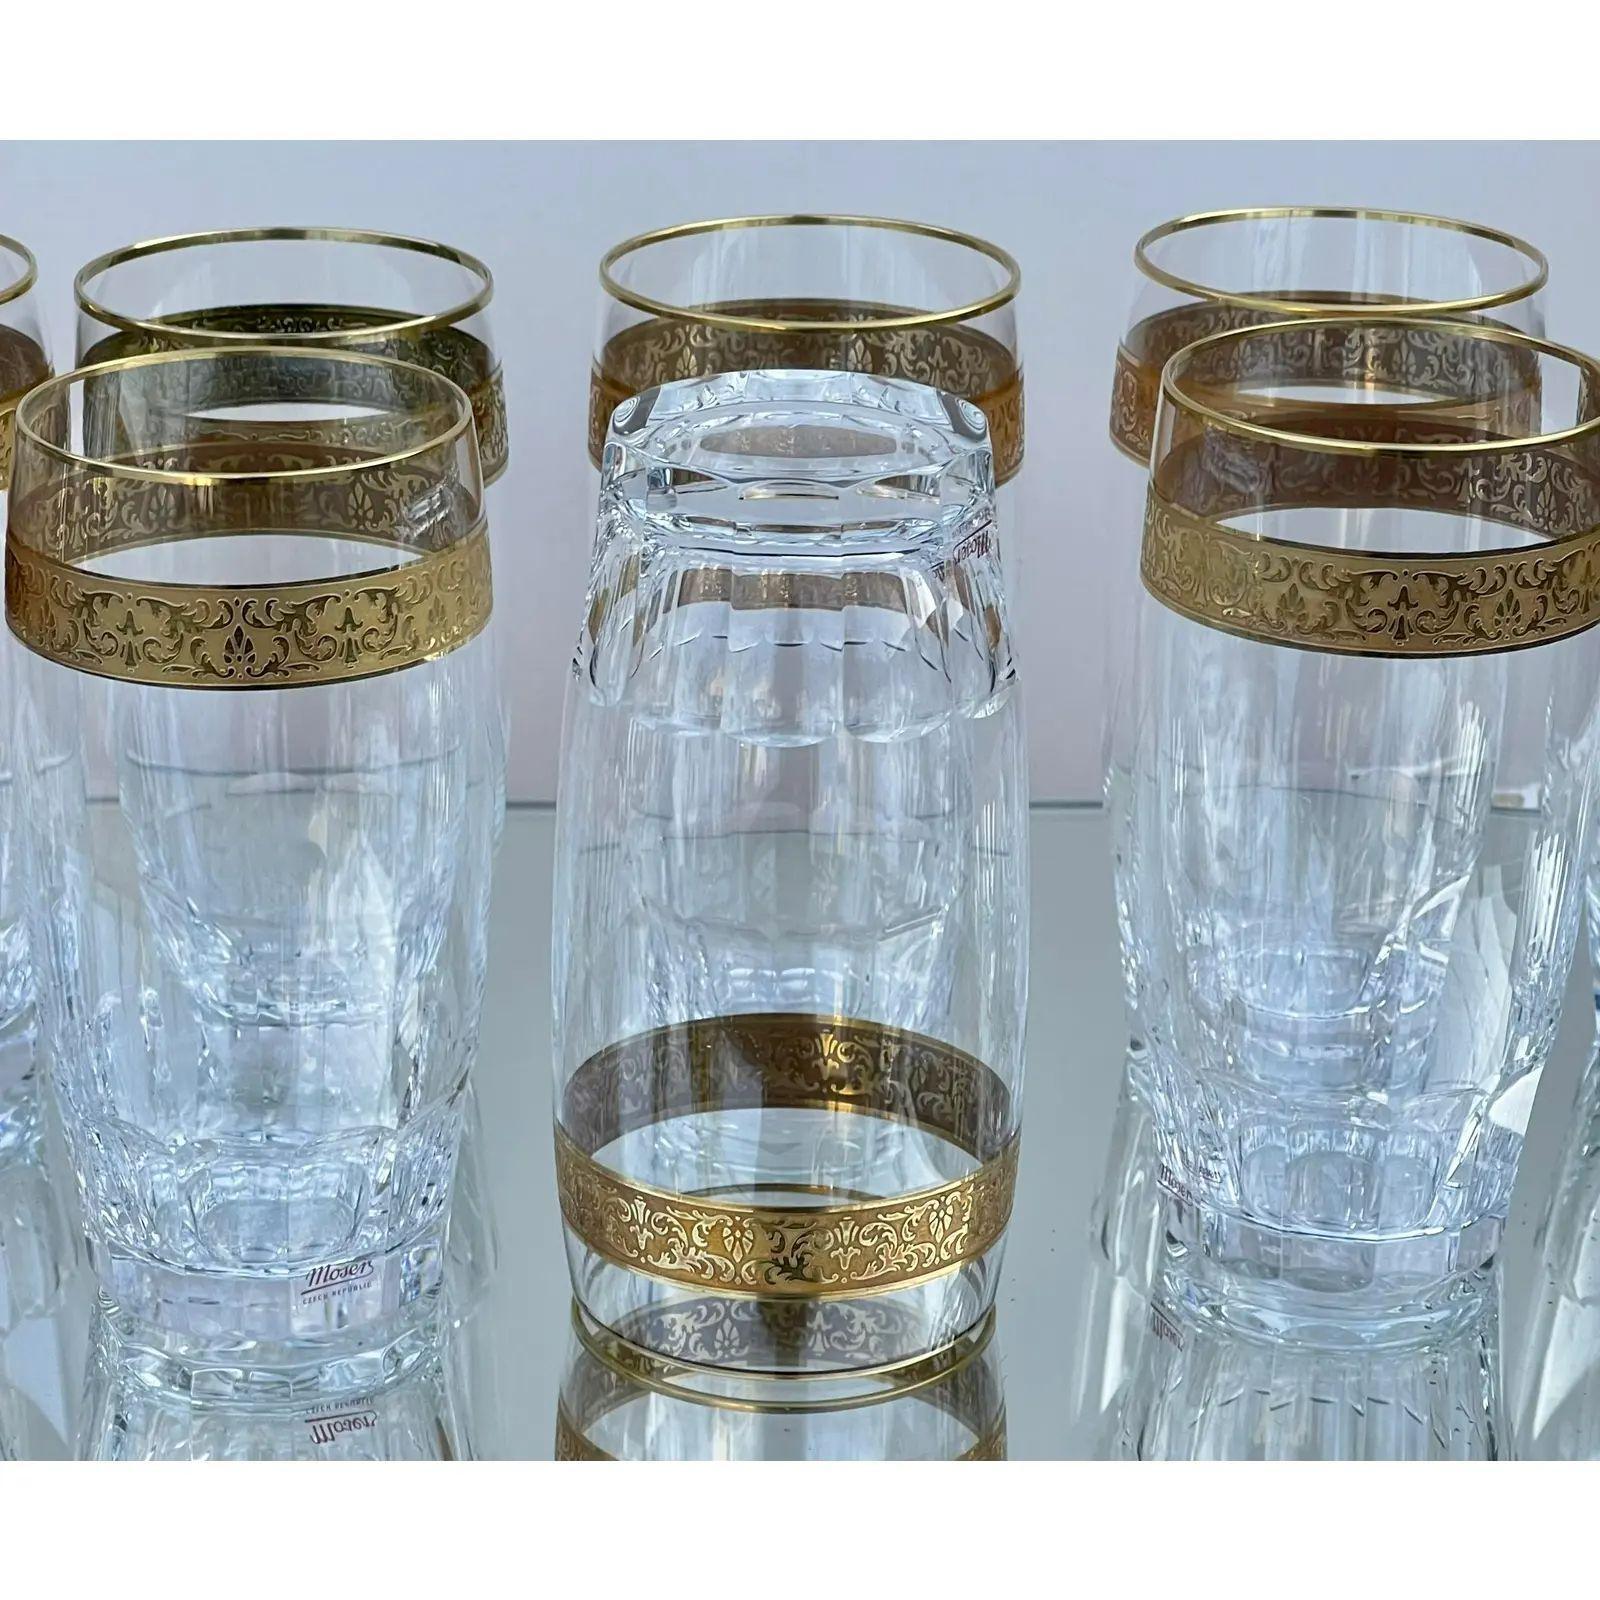 Moser gold encrusted crystal juice tumblers - set of 10.

Additional information: 
Materials: Crystal, Gold.
Color: Gold.
Brand: Moser Glassworks.
Designer: Thomas Moser.
Period: 1980s.
Styles: Art Deco.
Item Type: Vintage, Antique or